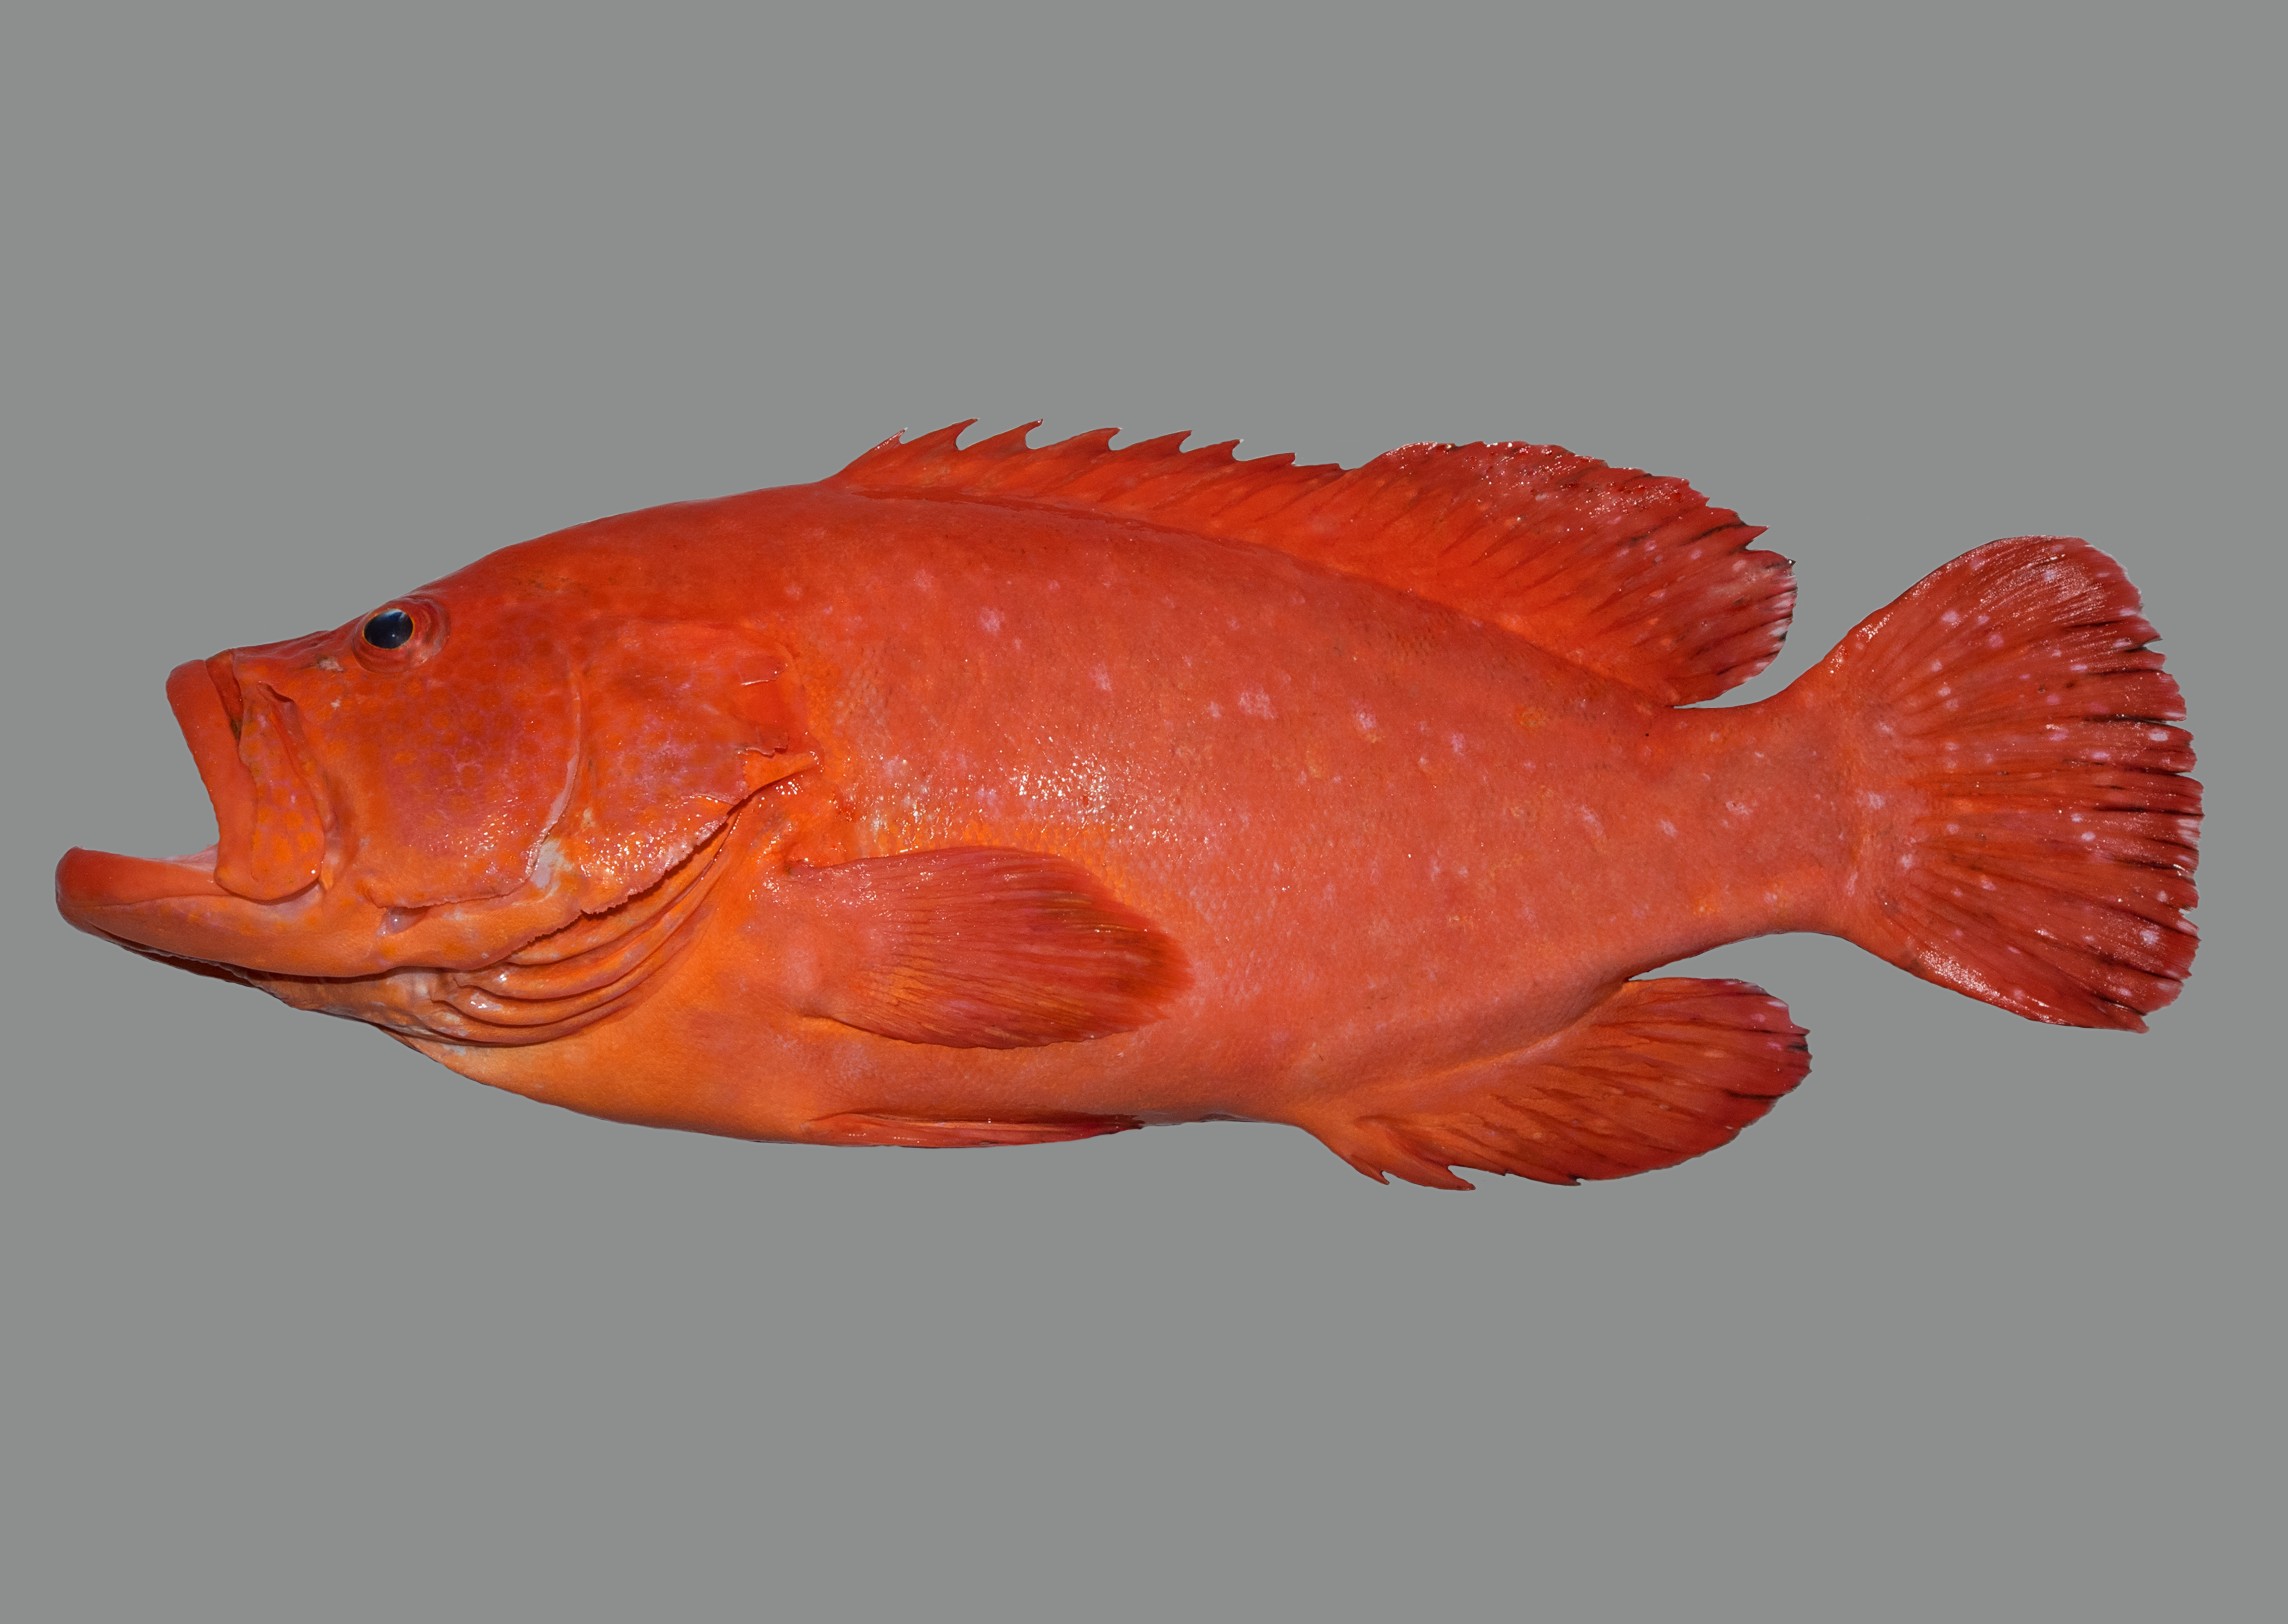 Cephalopholis sonnerati, 29 cm SL, Socotra Archipelago: Abd Al-Kuri Island; S.V. Bogorodsky & U. Zajonz